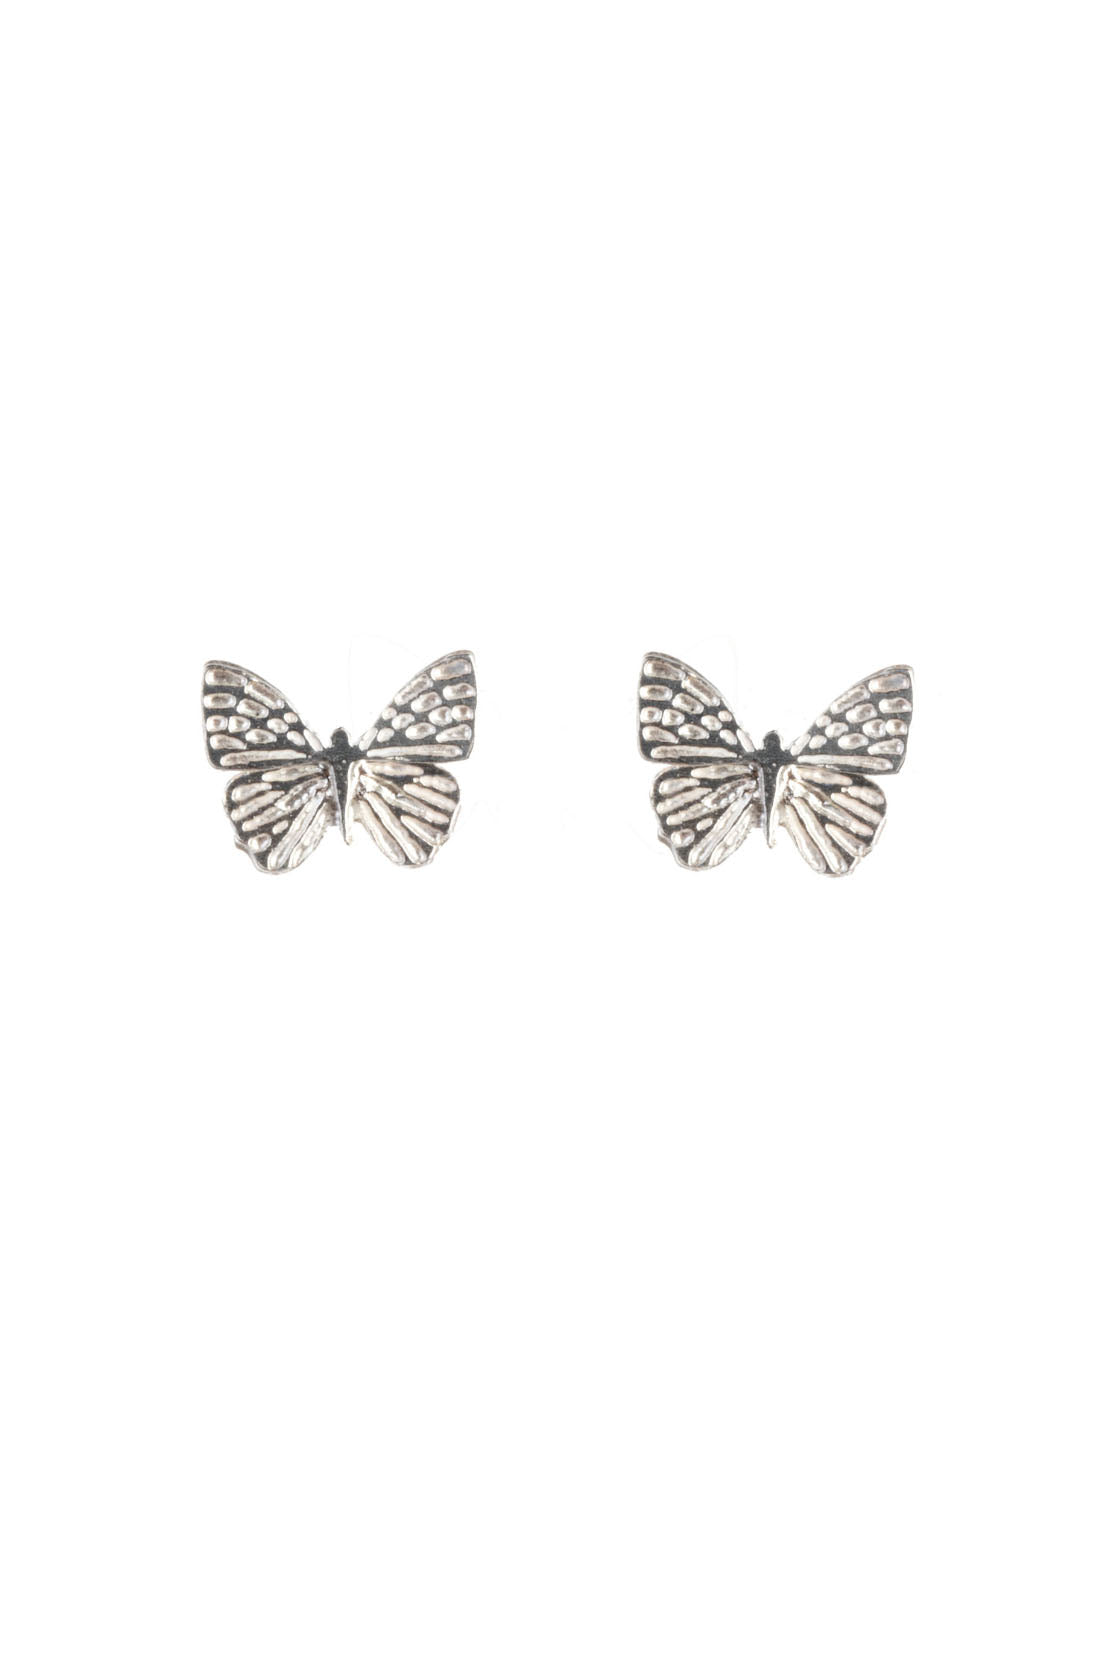 Rombelle - Butterfly Diamond Studs - Lab Created Diamonds - F Color / –  Robinson's Jewelers